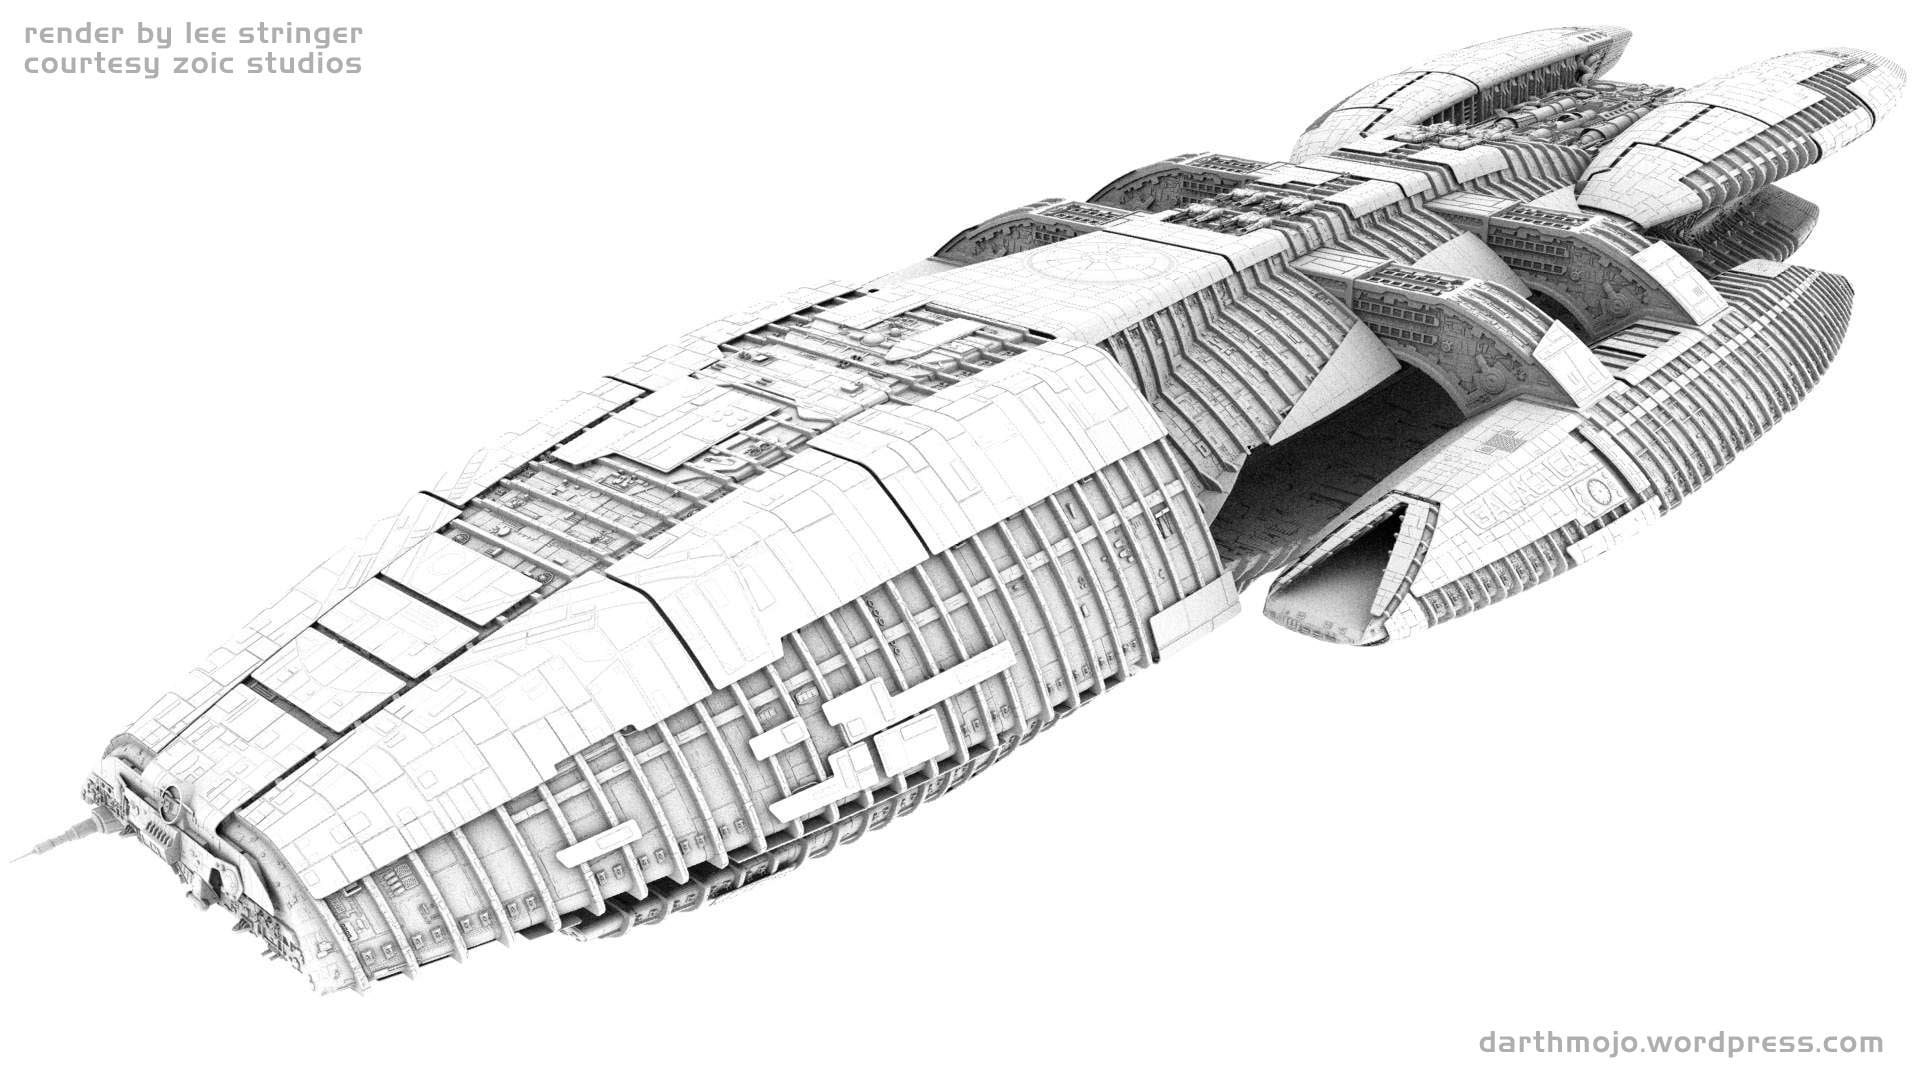 Battlestar Galactica, spaceship